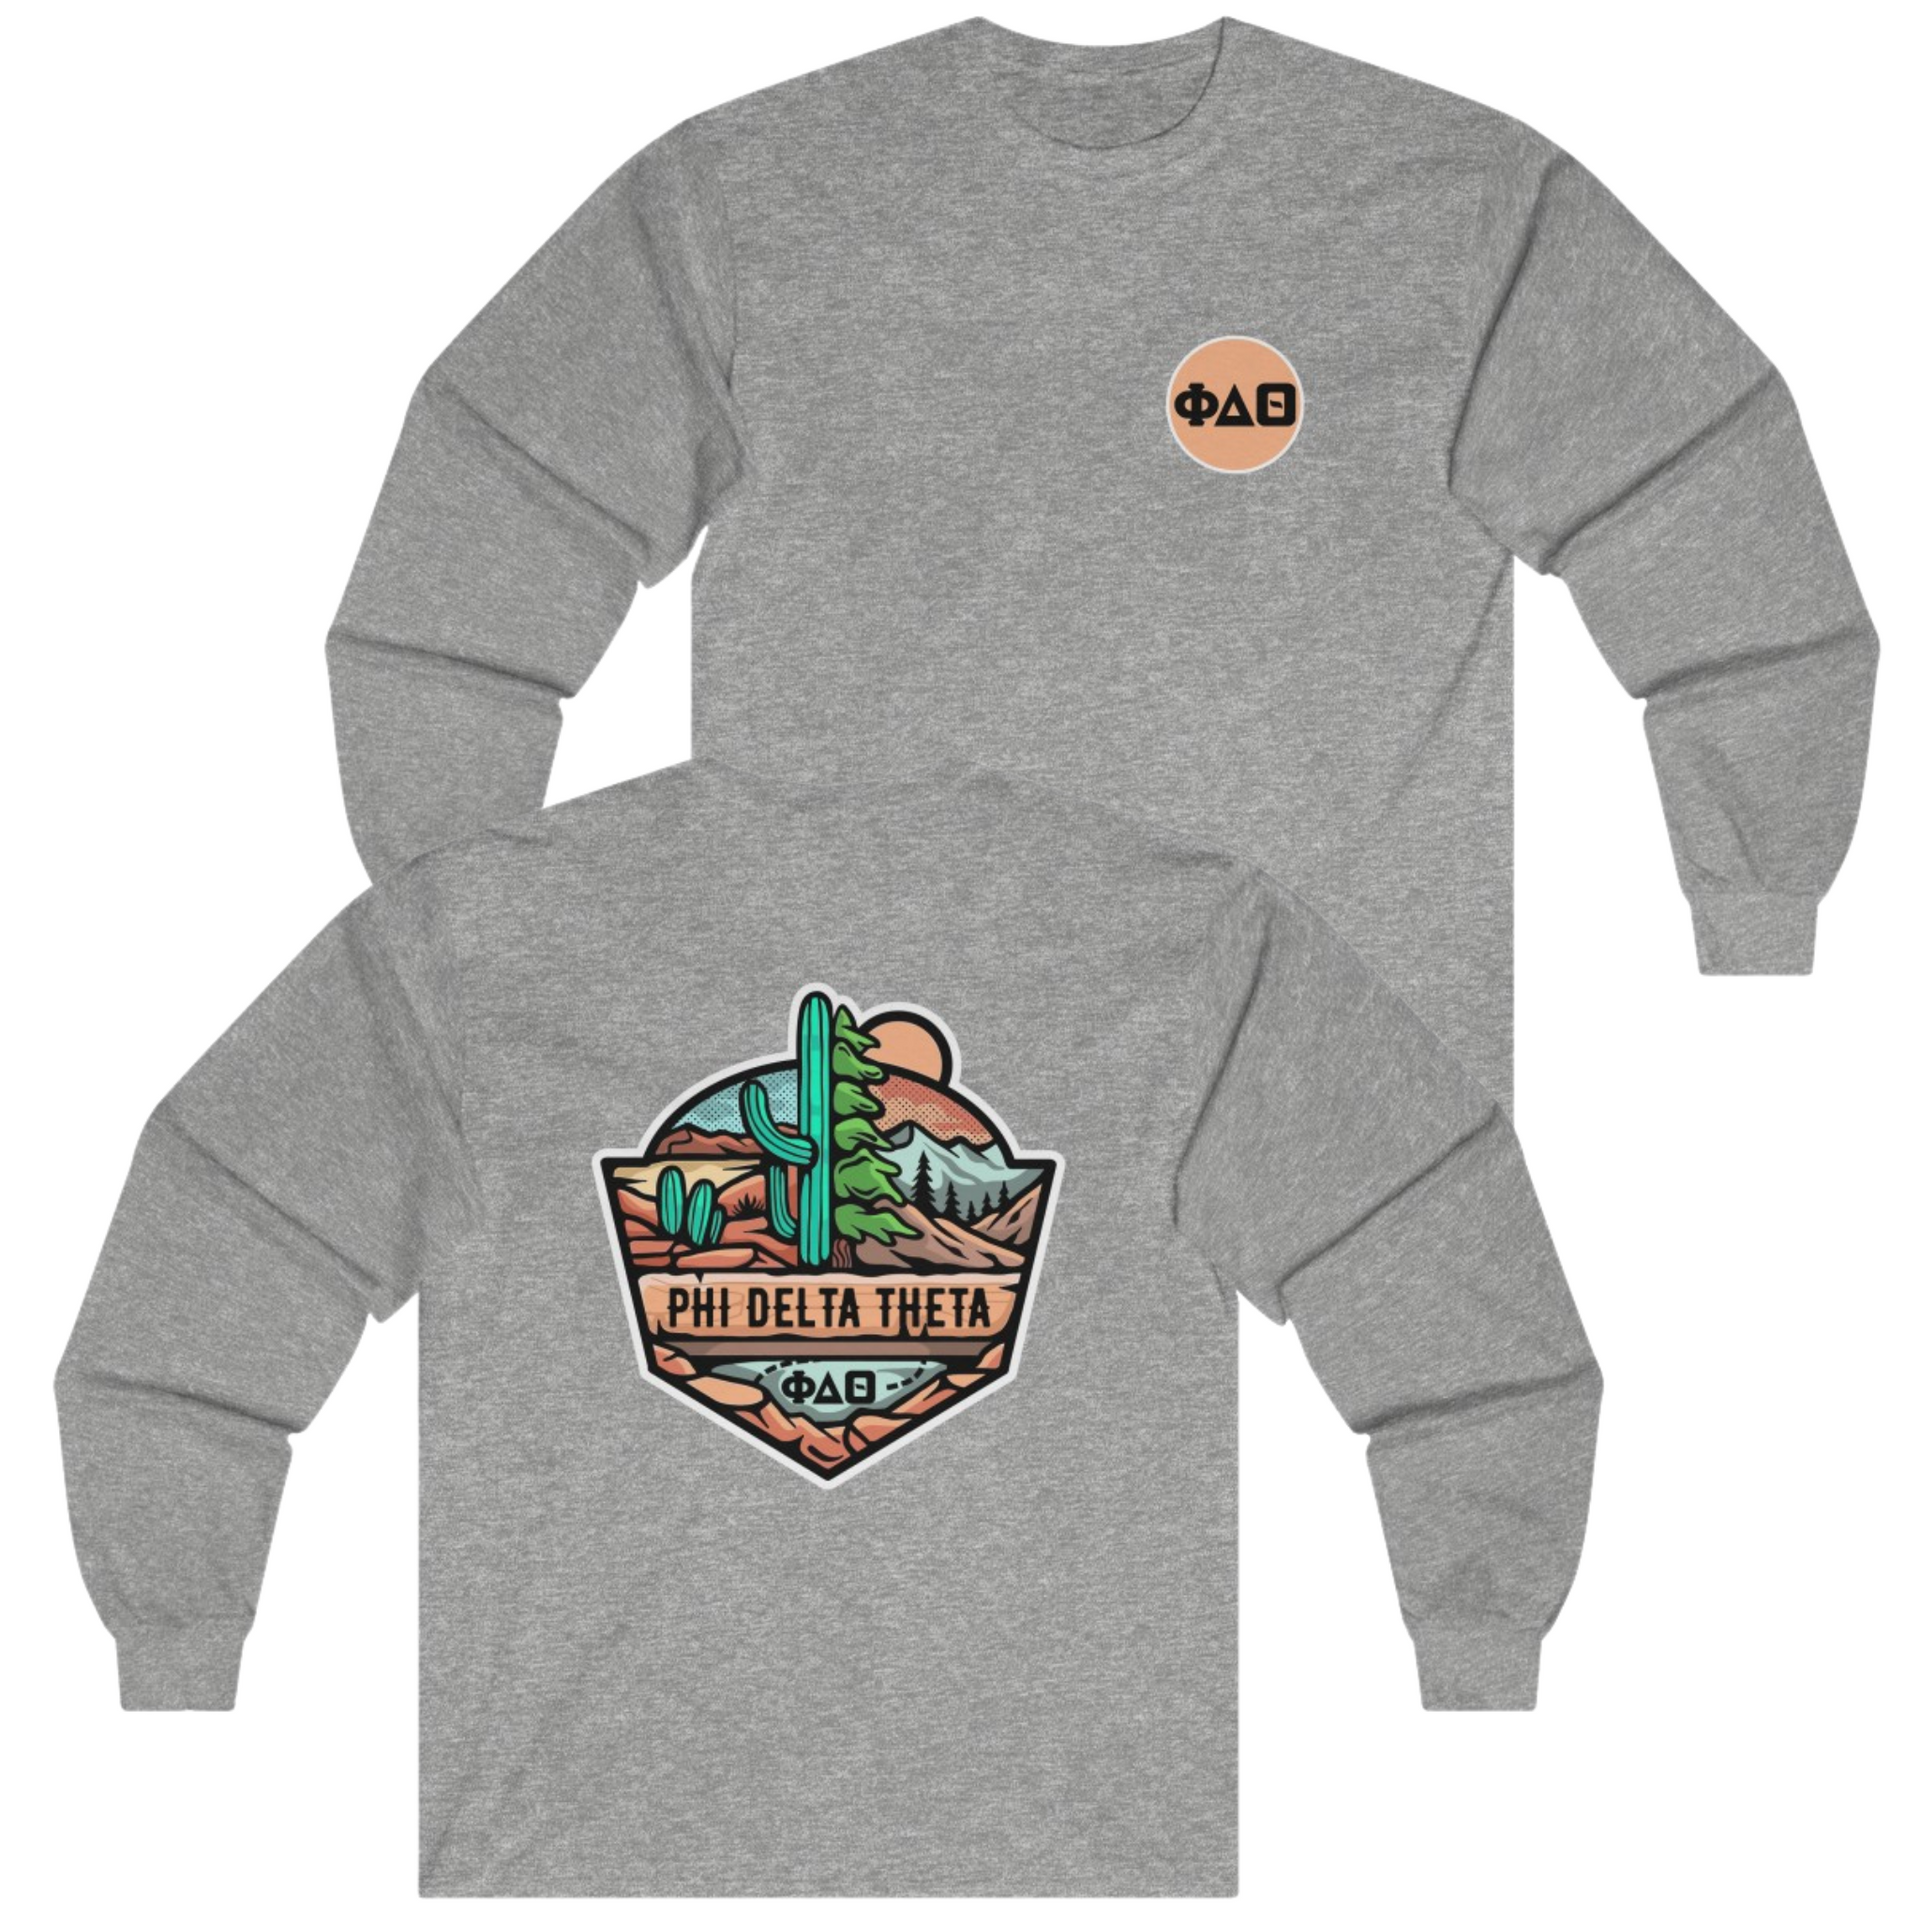 Grey Phi Delta Theta Graphic Long Sleeve T-Shirt | Desert Mountains | phi delta theta fraternity greek apparel 